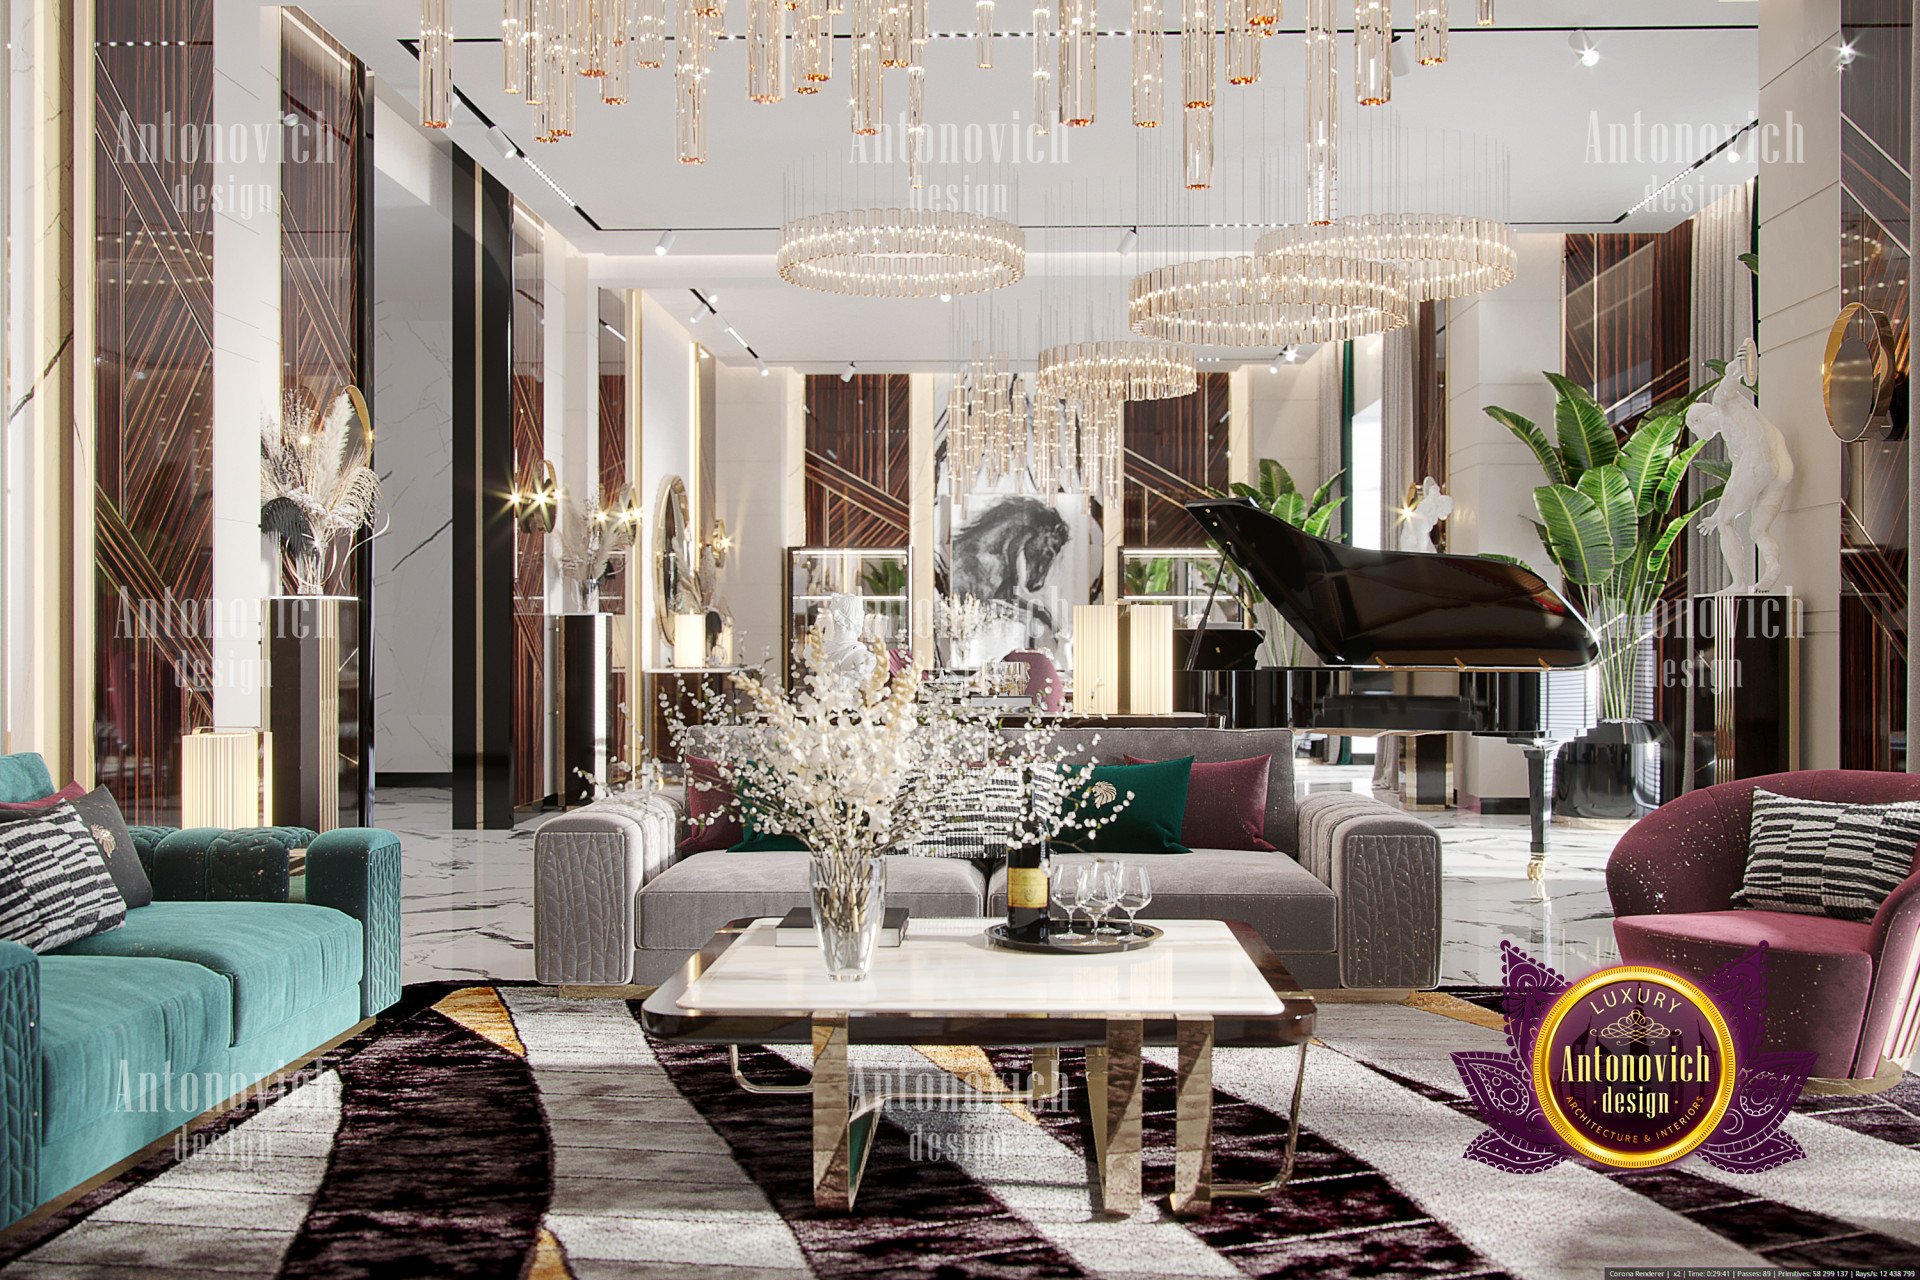 Sophisticated Interior Design luxury interior design company in California